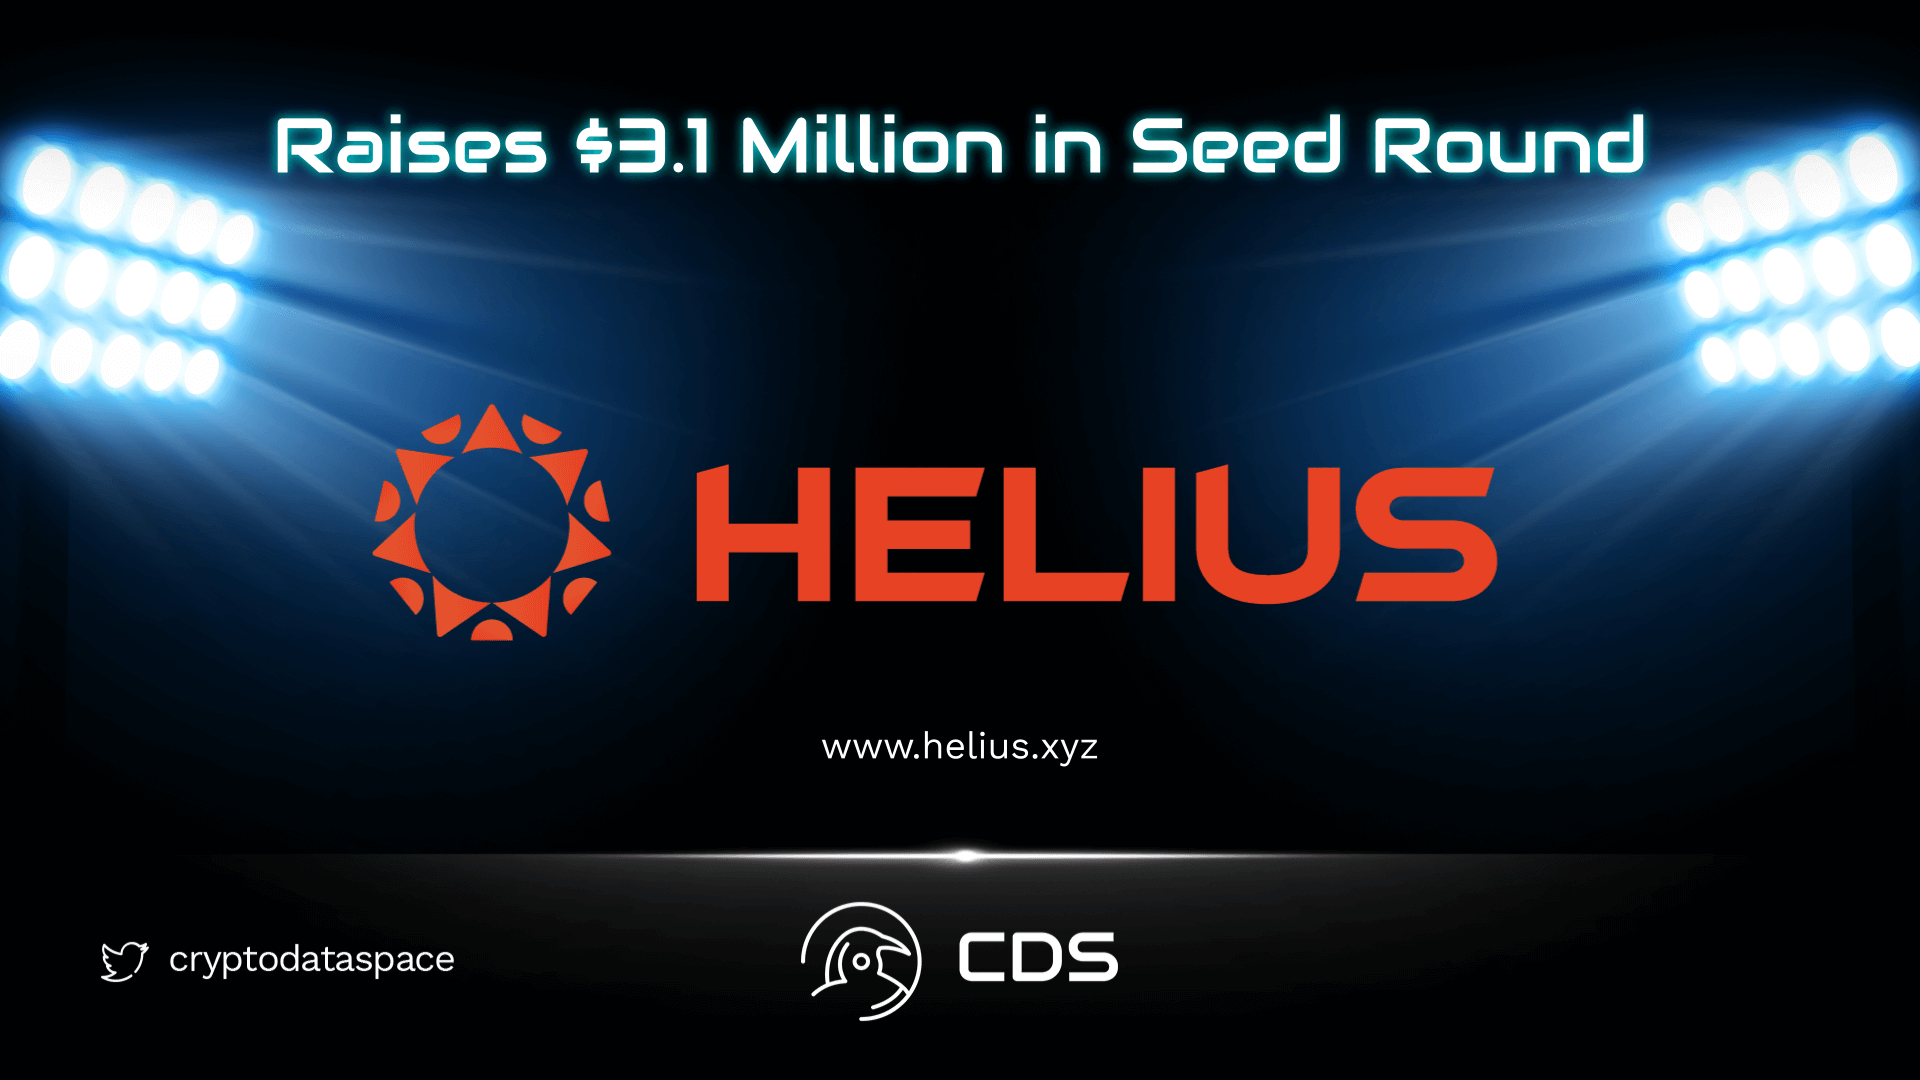 Helius Raises $3.1 Million in Seed Round